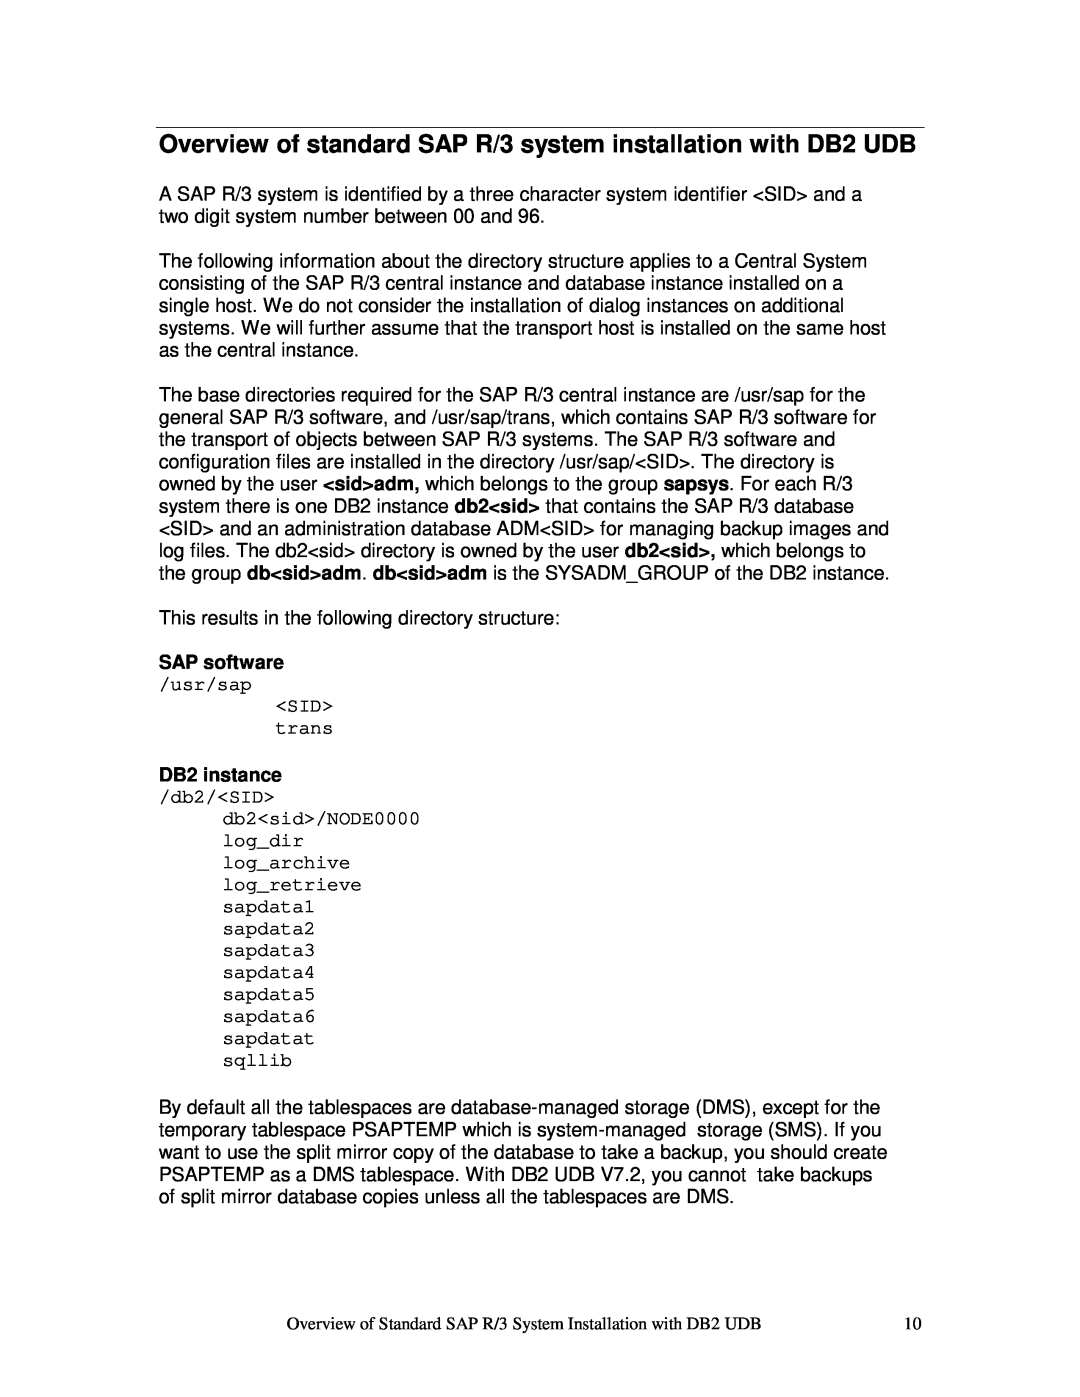 IBM V7.2 manual Overview of standard SAP R/3 system installation with DB2 UDB, SAP software 